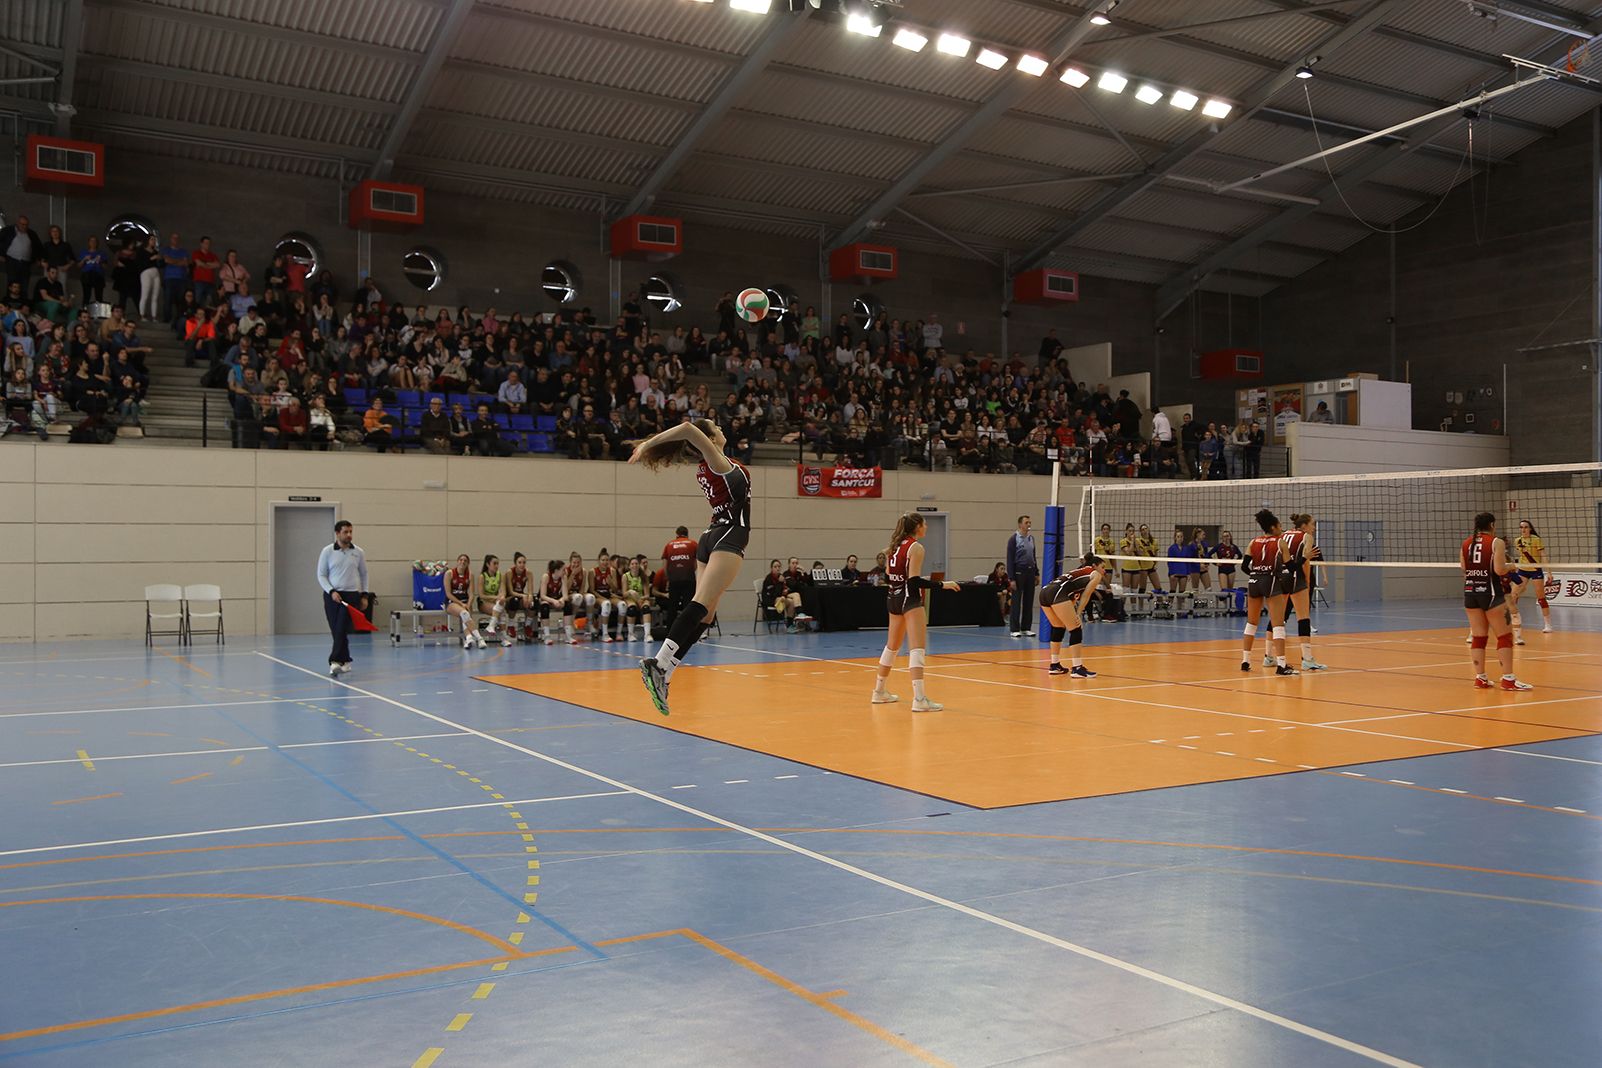 Partit de lliga voleibol femení CV Sant Cugat-CVB Barça. FOTO: Anna Bassa